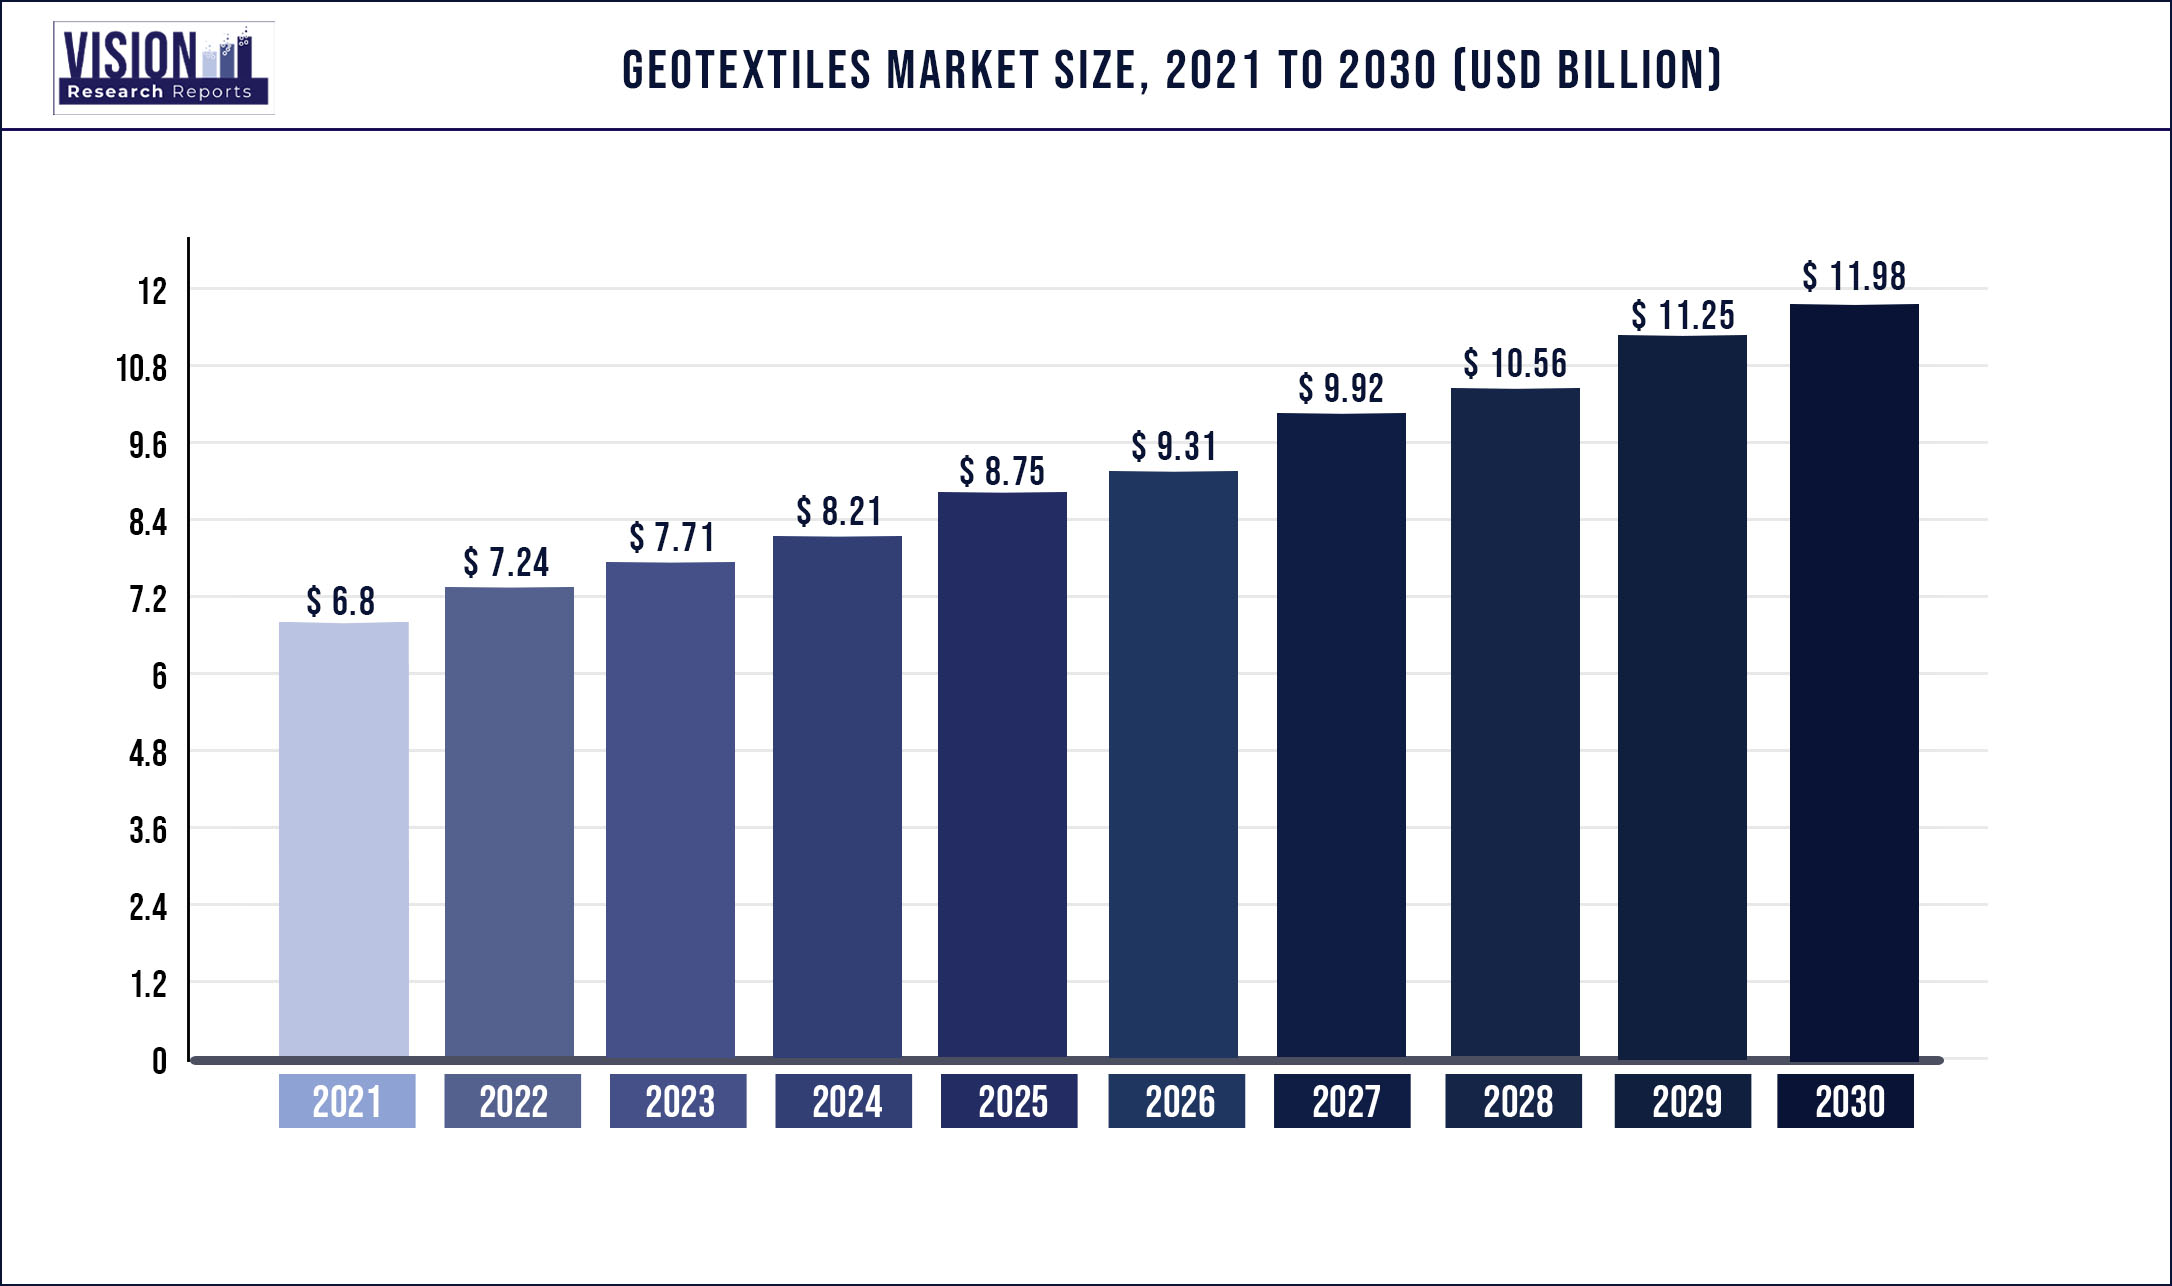 Geotextiles Market Size 2021 to 2030